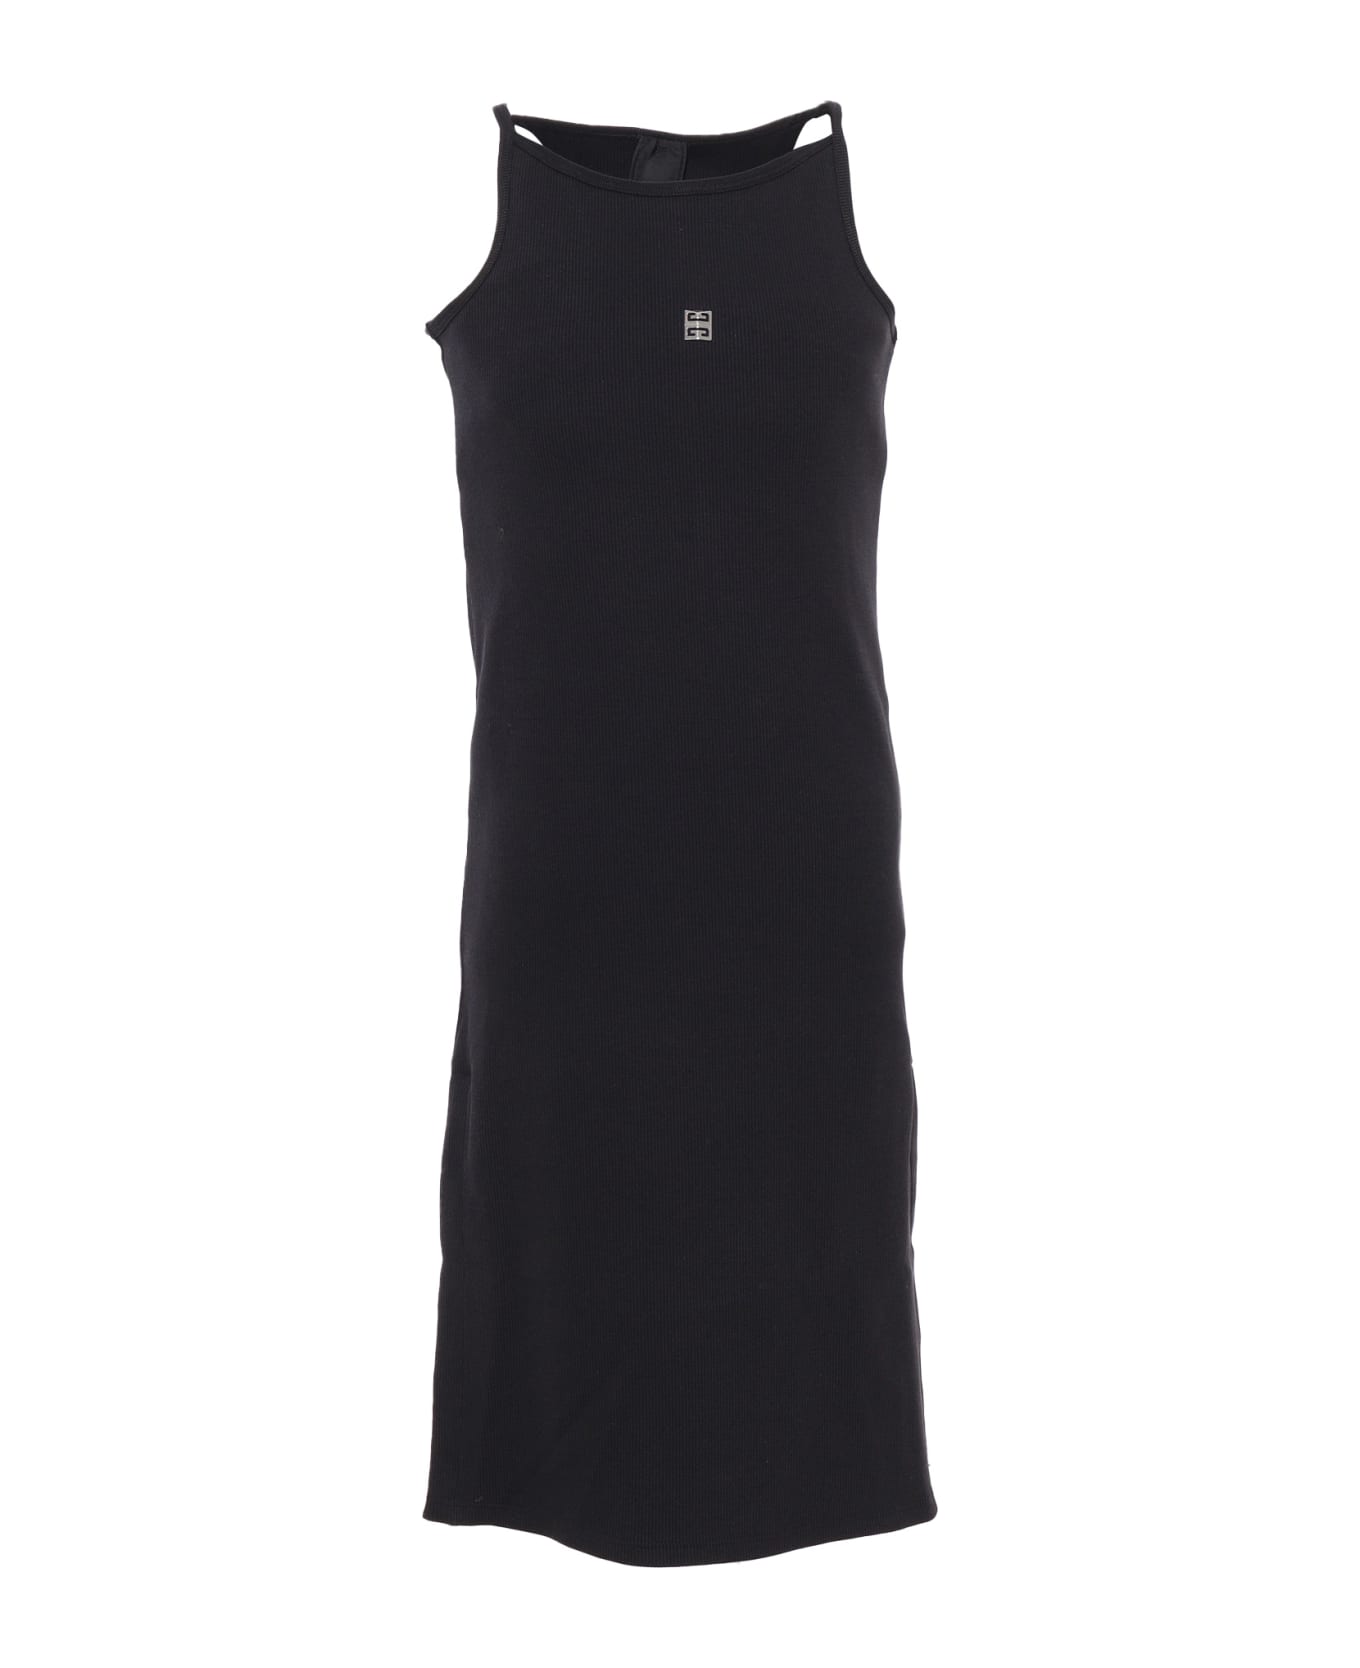 Givenchy Black Dress With Logo - BLACK